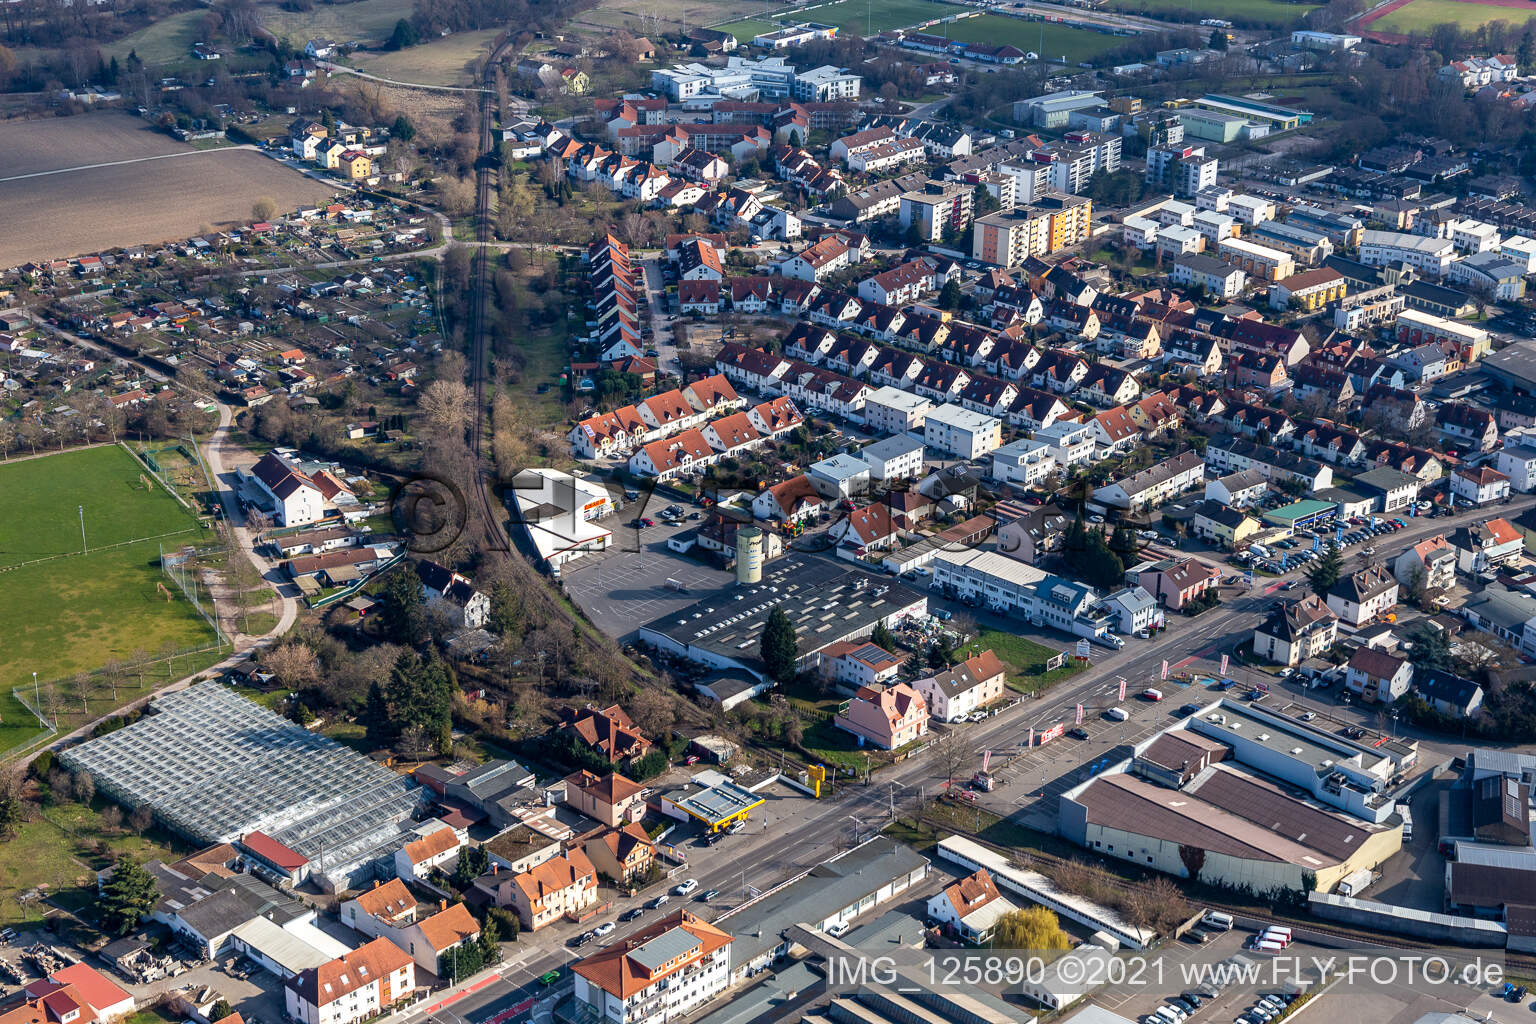 Ancien site Promarkt sur Rabensteinerweg à Speyer dans le département Rhénanie-Palatinat, Allemagne vue d'en haut